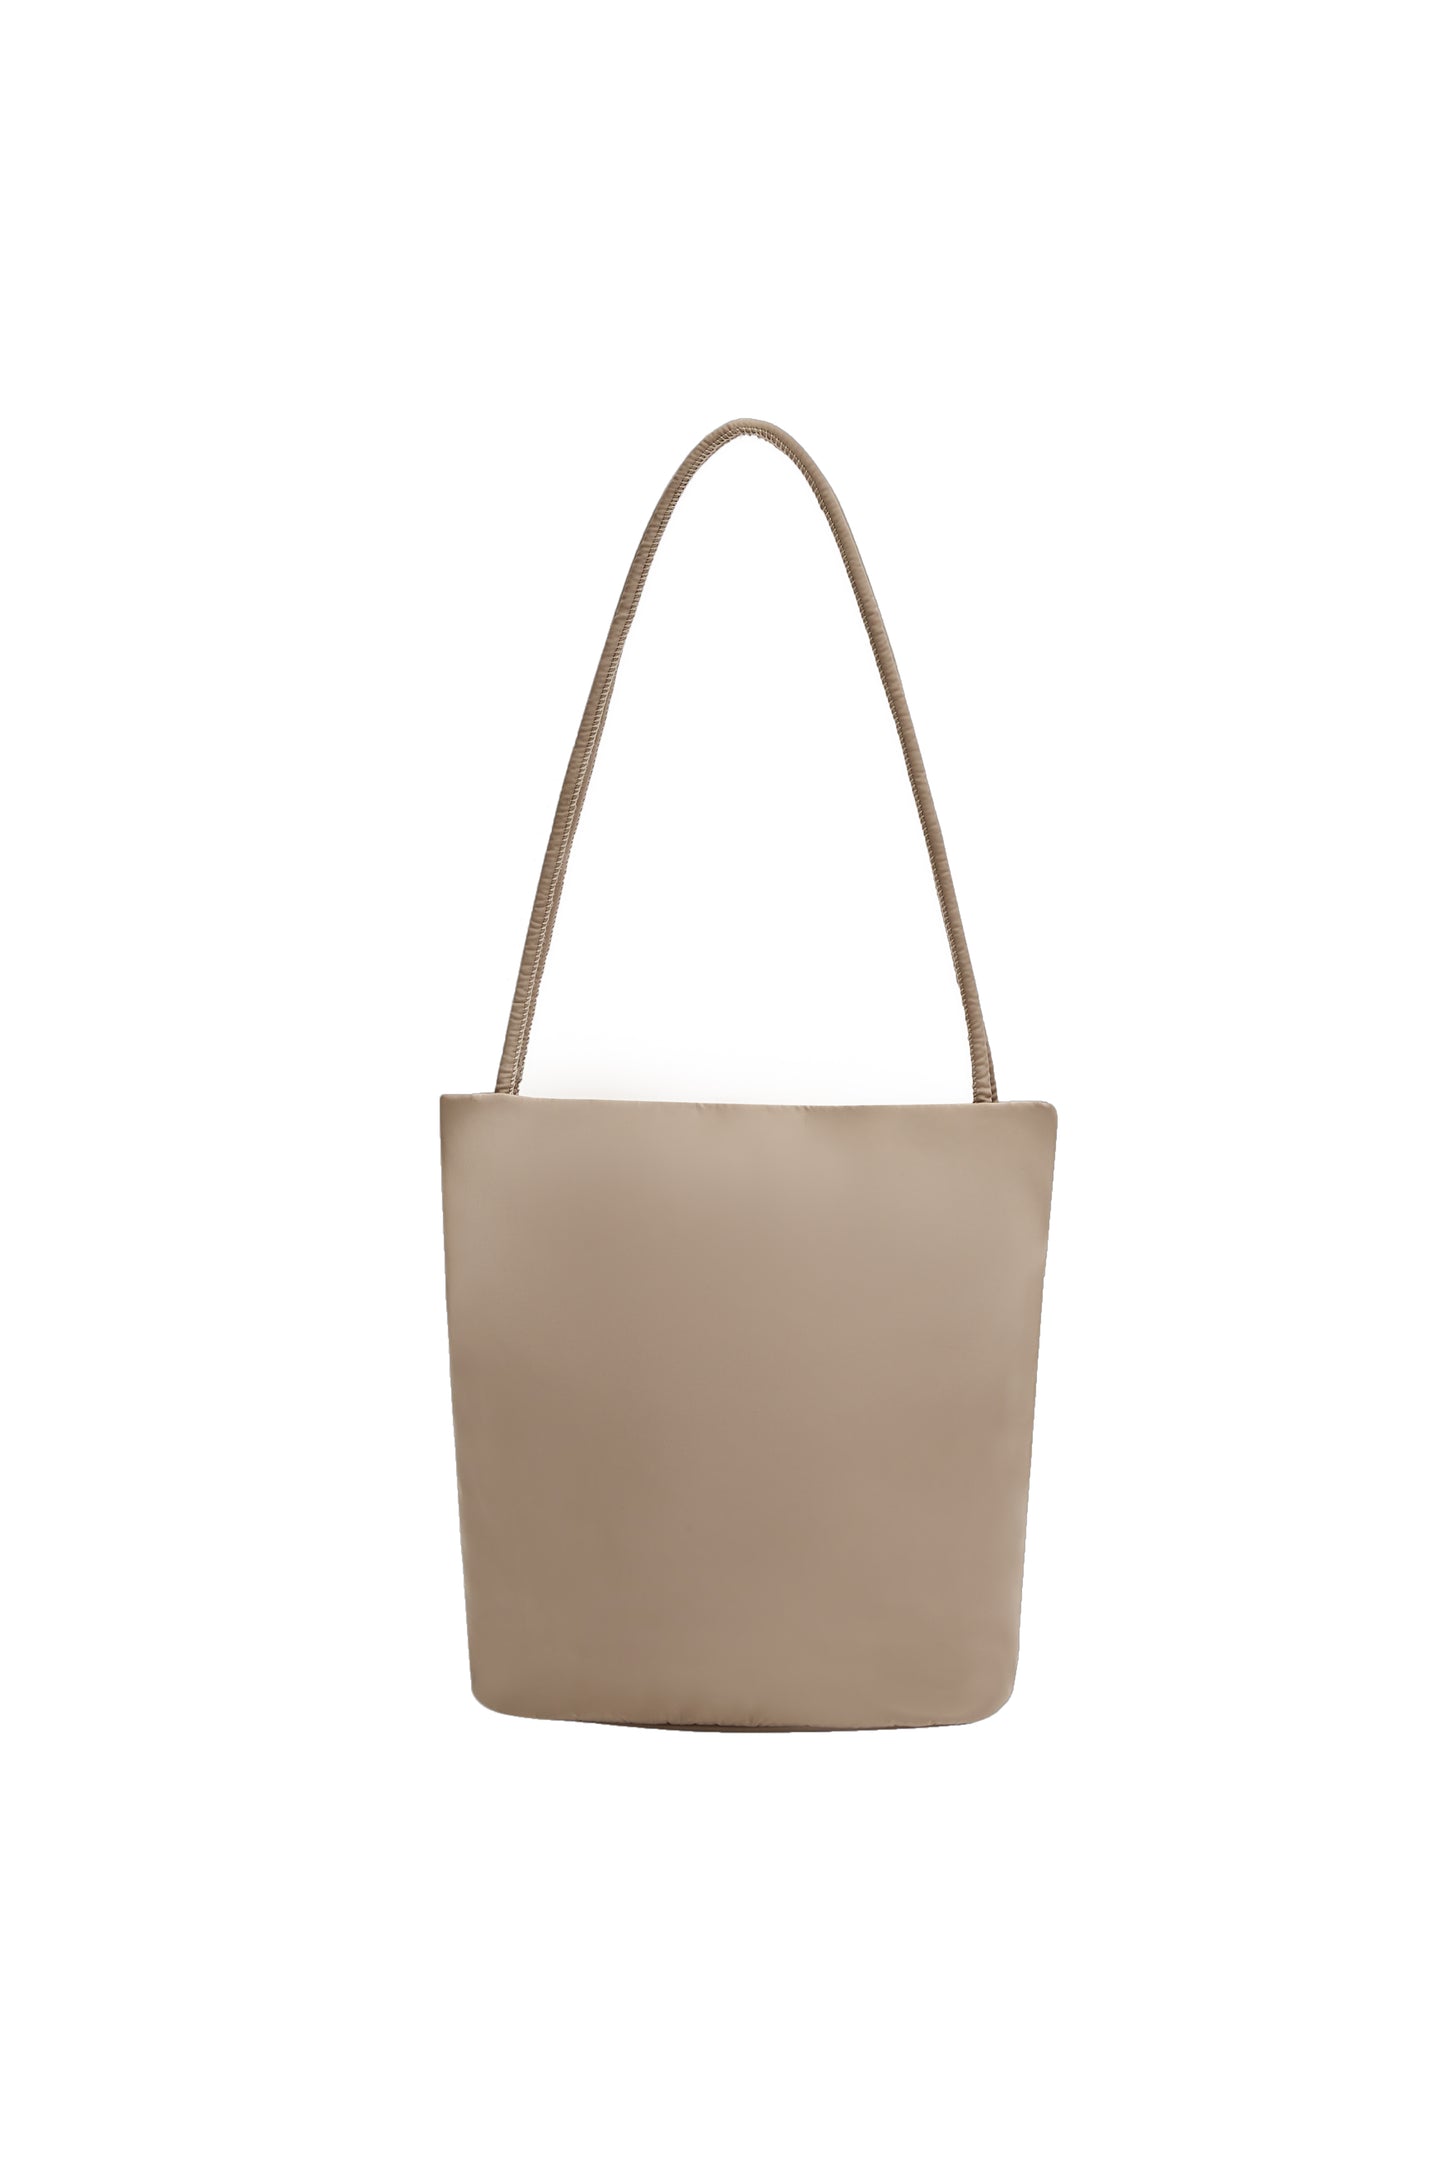 TENERA Recycled Nylon Bucket One-Shoulder Bag Small/Khaki